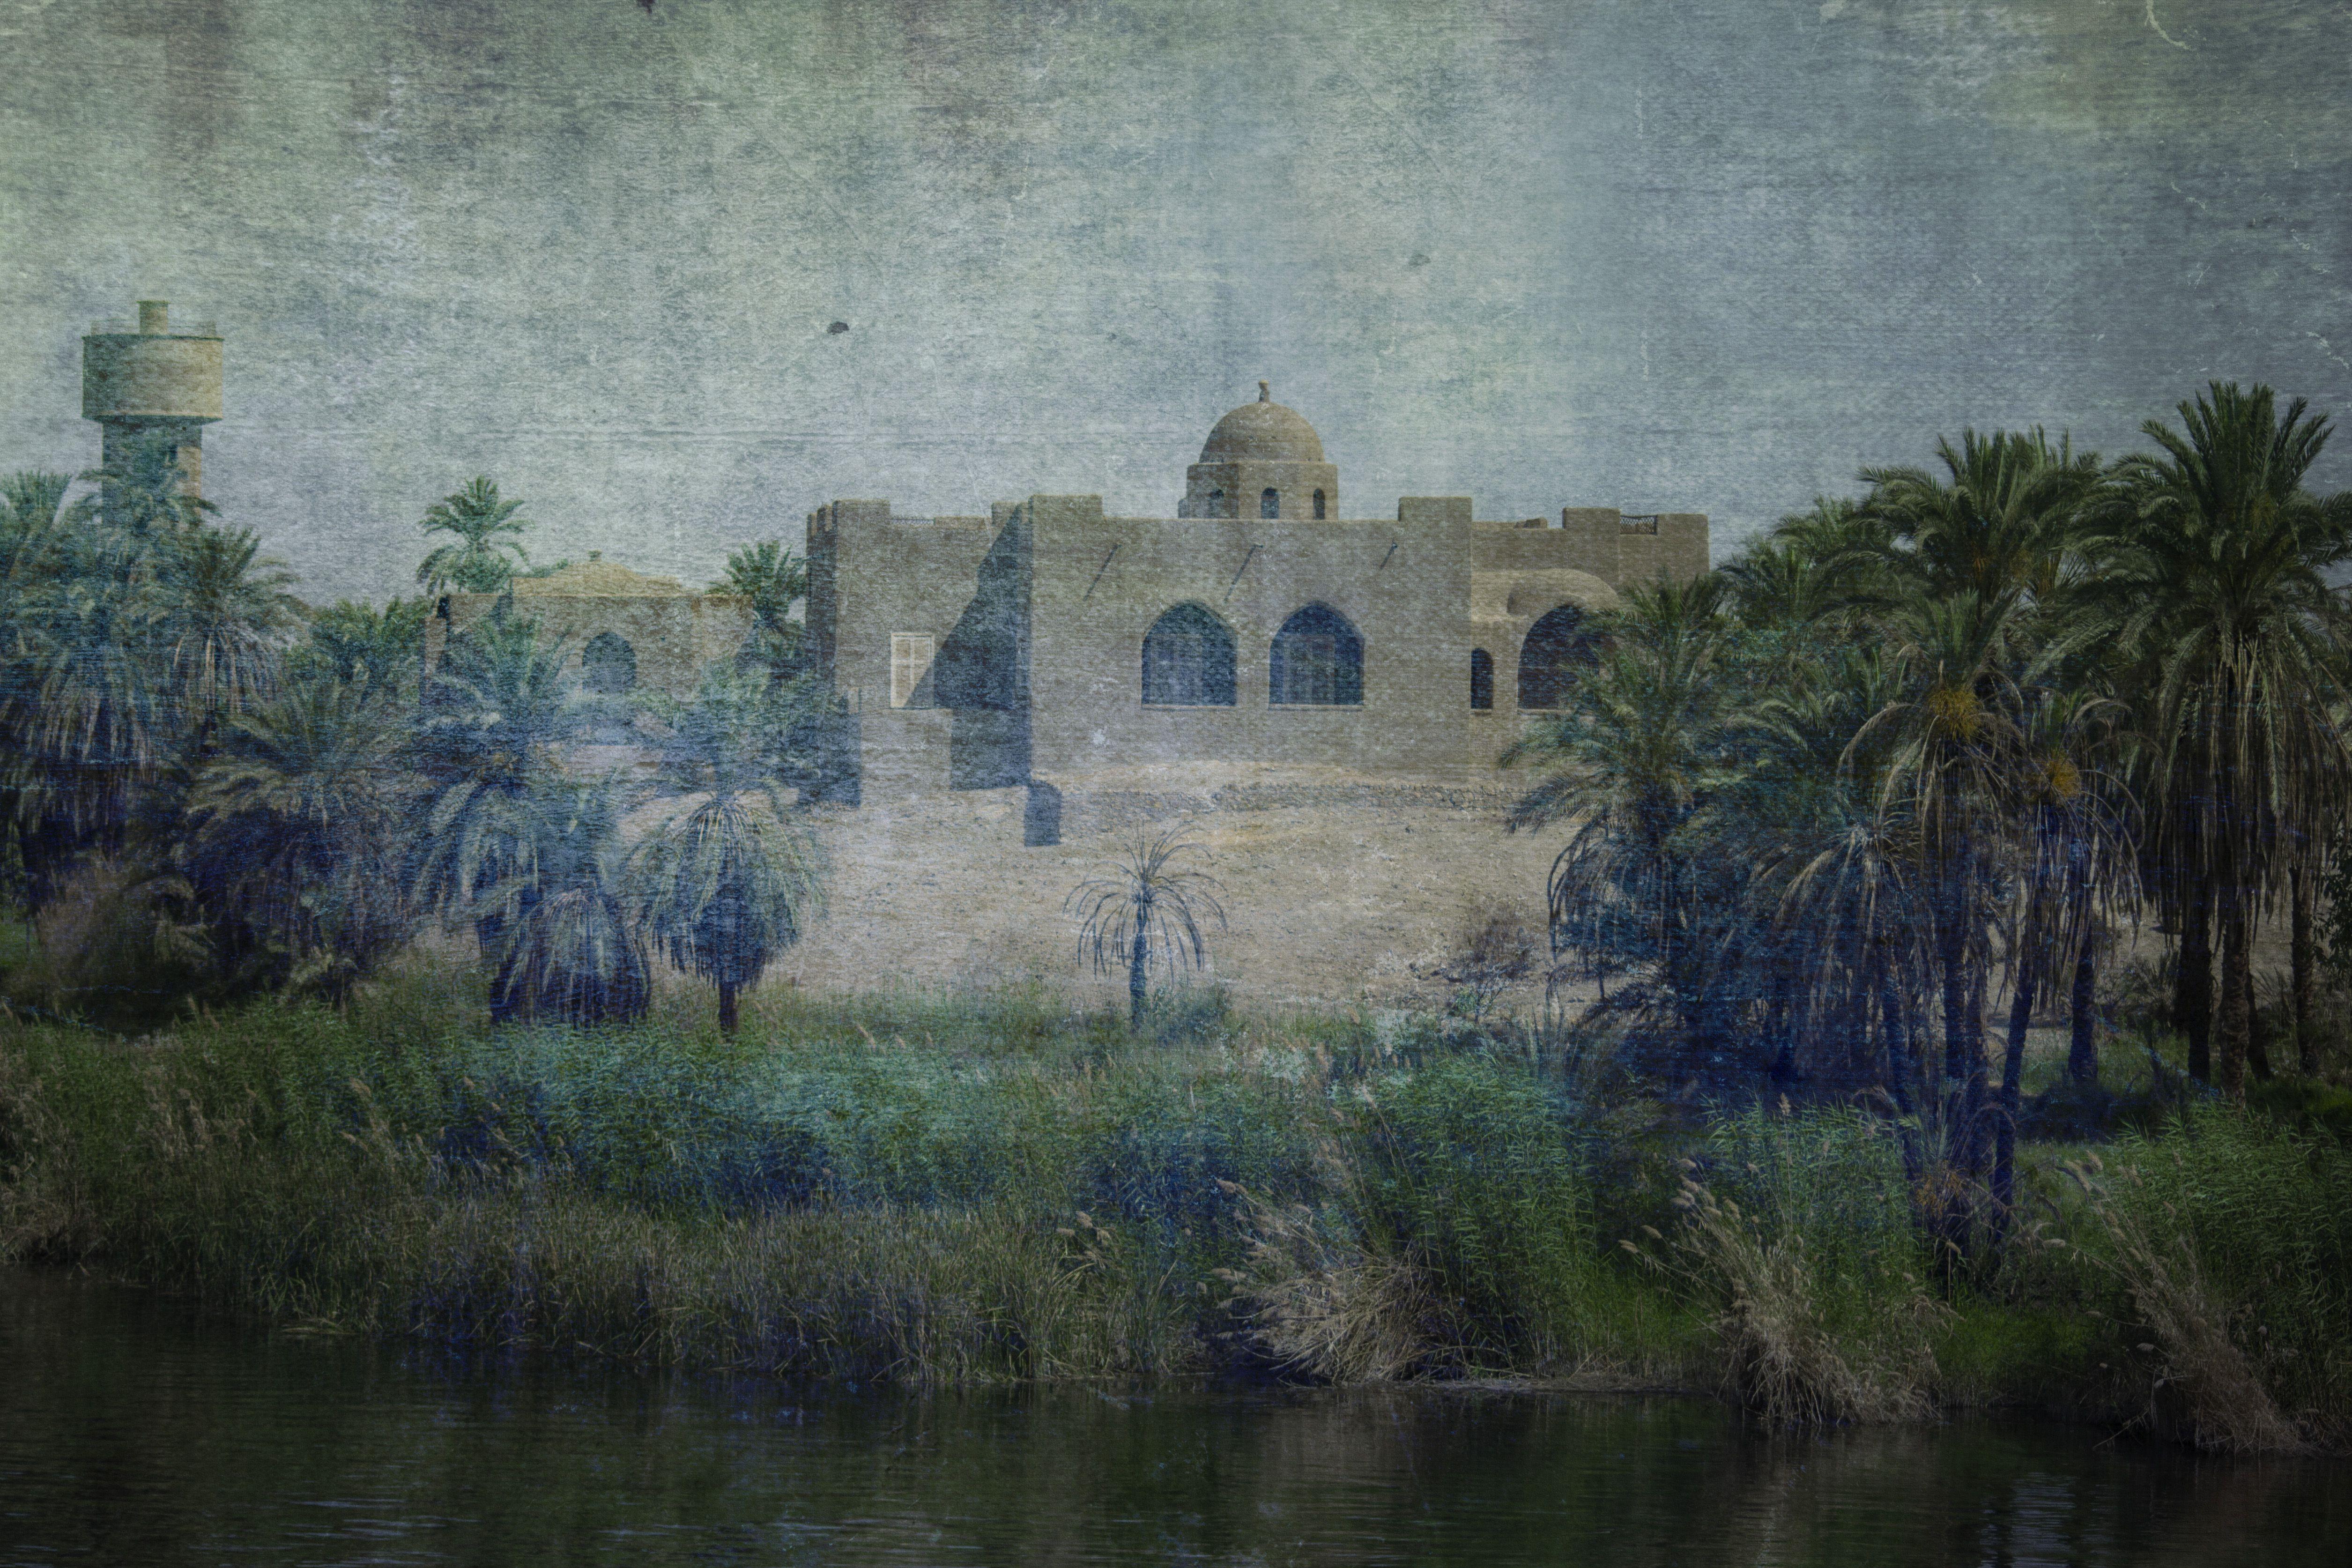 Viet Ha Tran Color Photograph - Life on the Nile River II, Photograph, C-Type